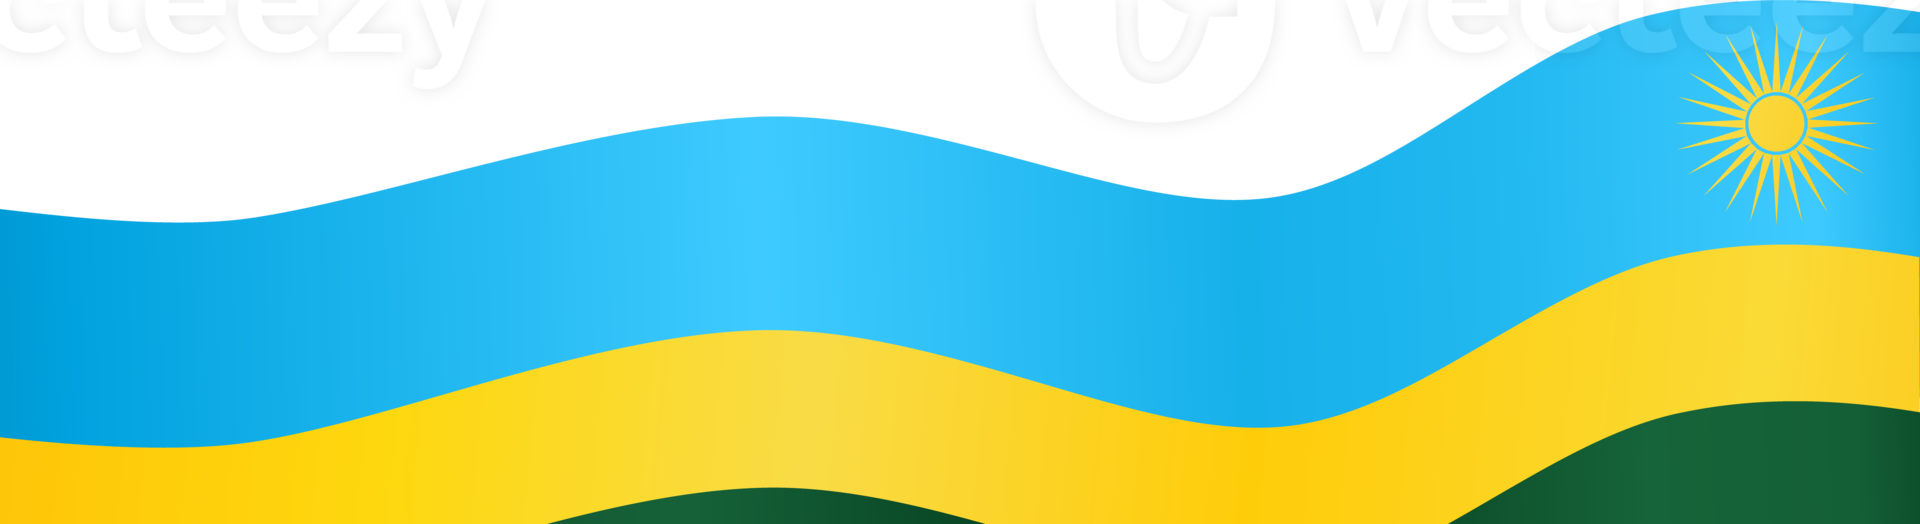 Rwanda flag wave png